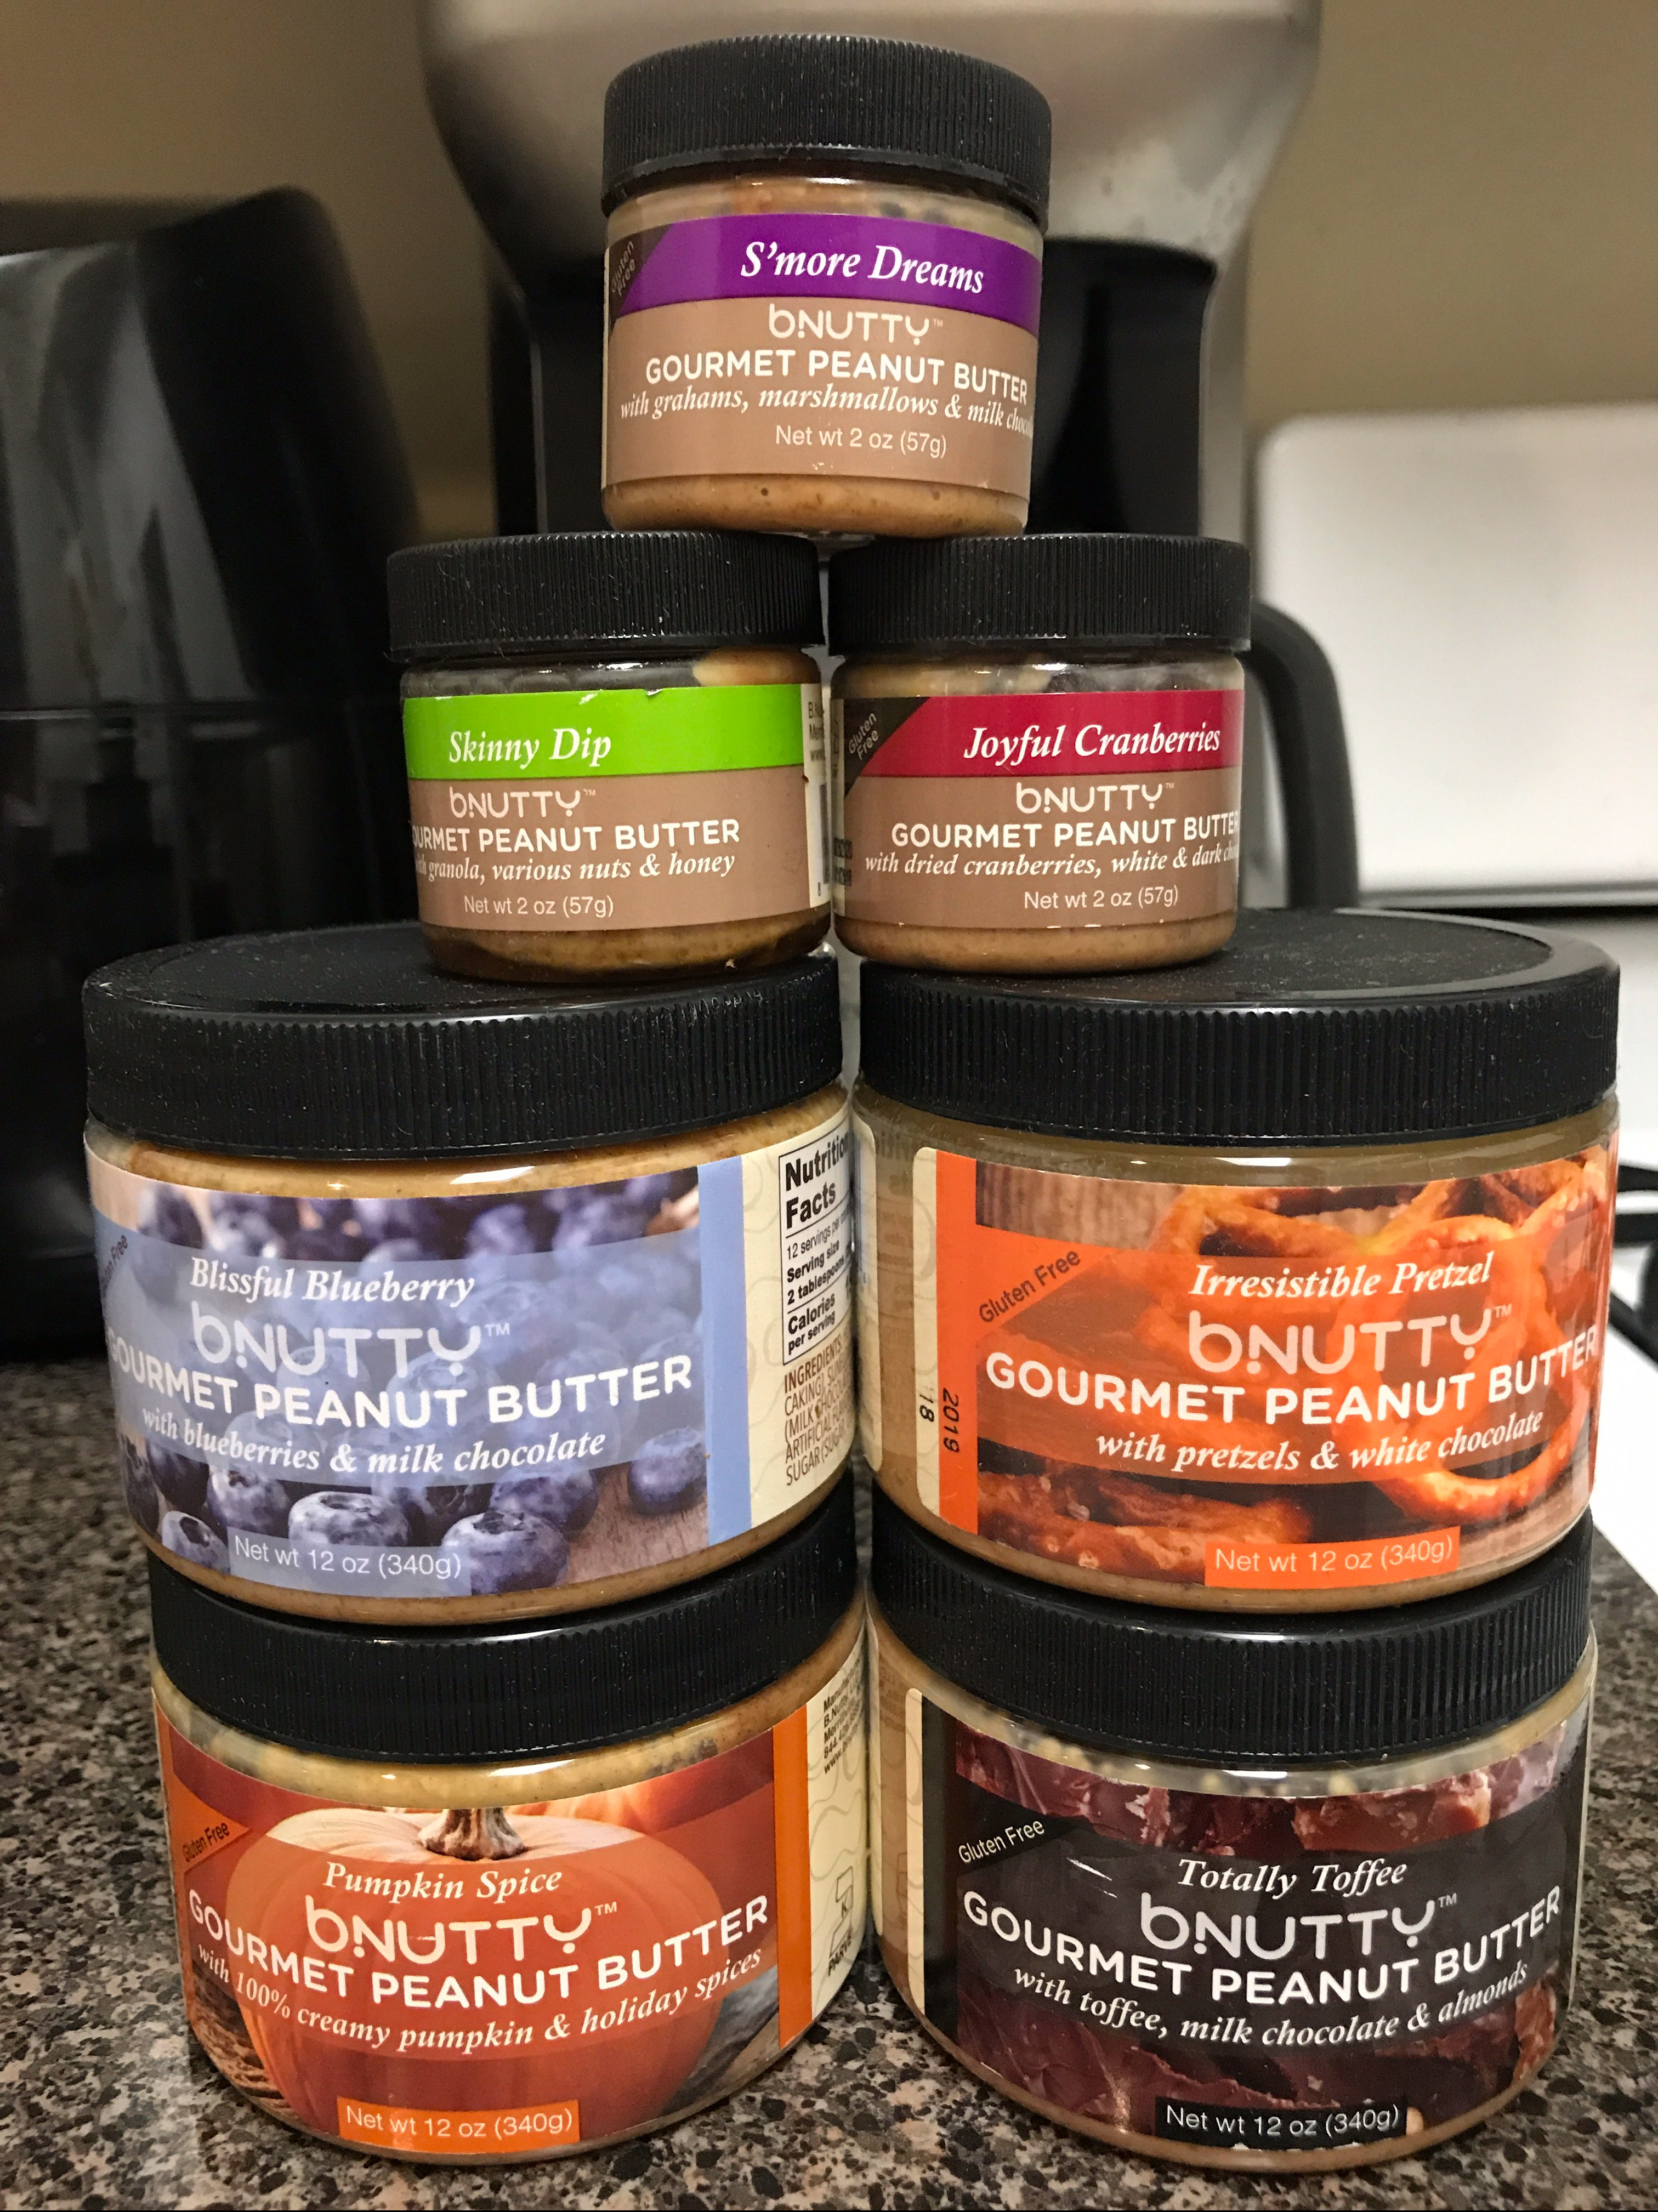 Gift Guide Spotlight: B.NUTTY Gourmet Peanut Butter